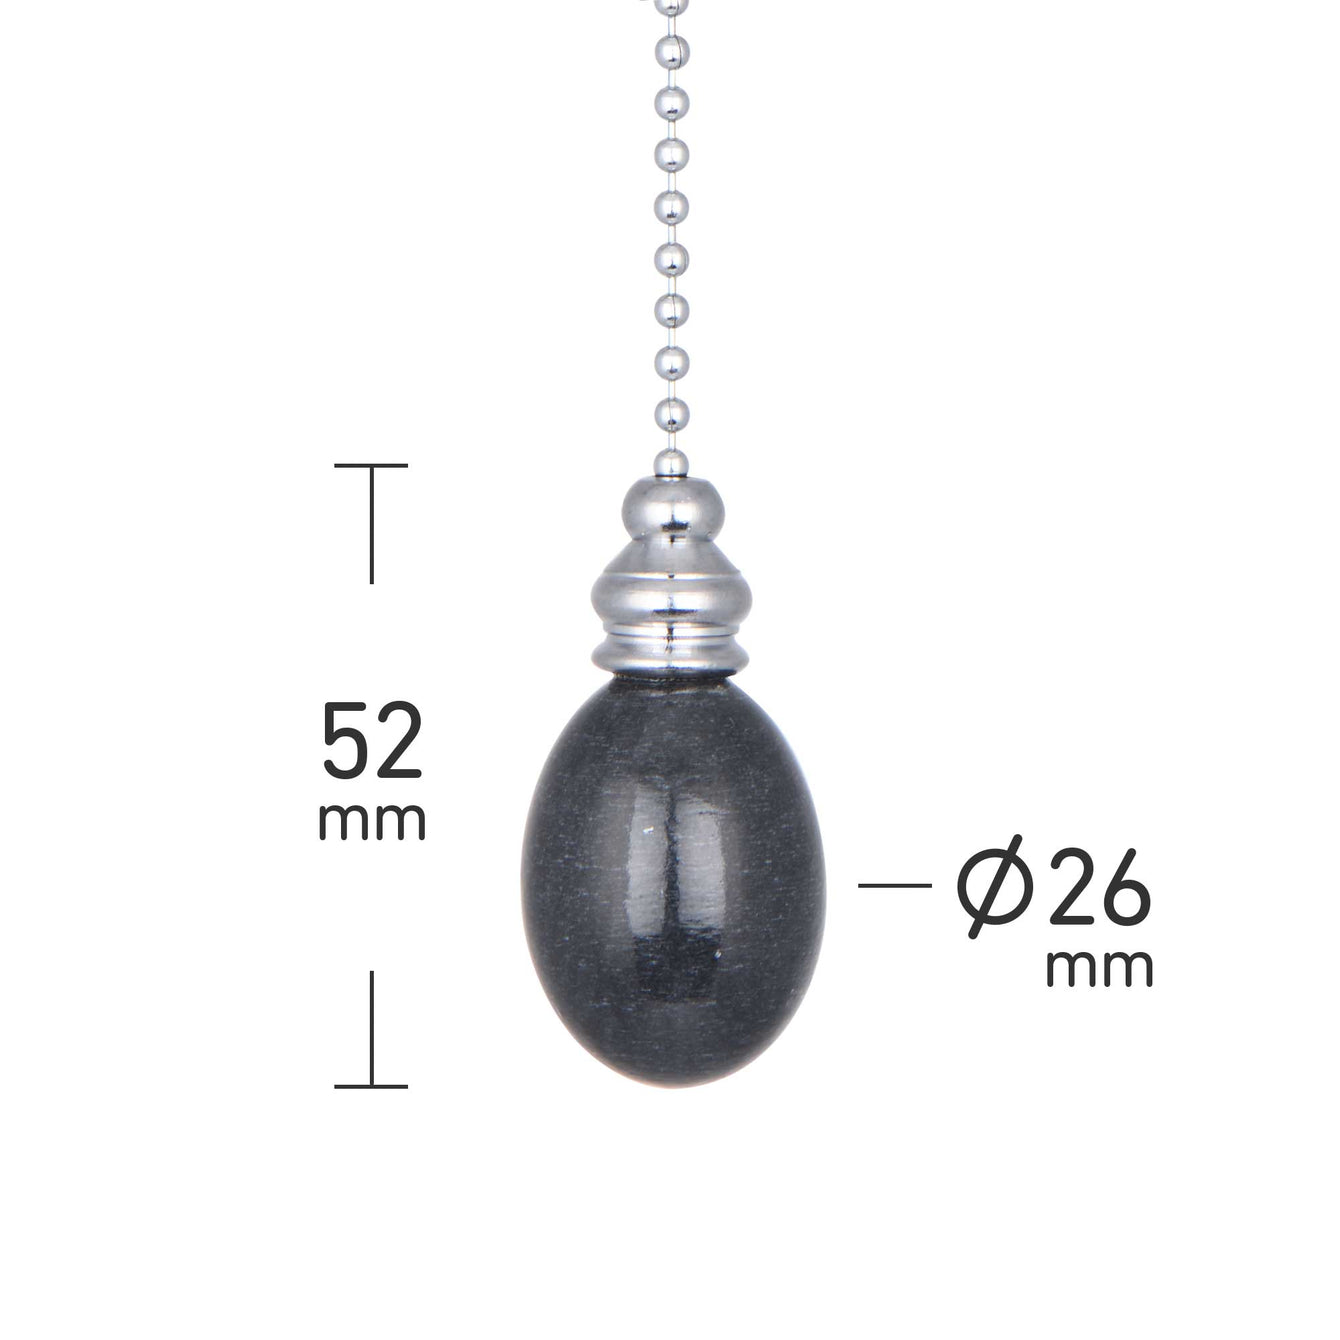 ElekTek Light Pull Chain Marble Egg Drop Chrome With 80cm Matching Chain 